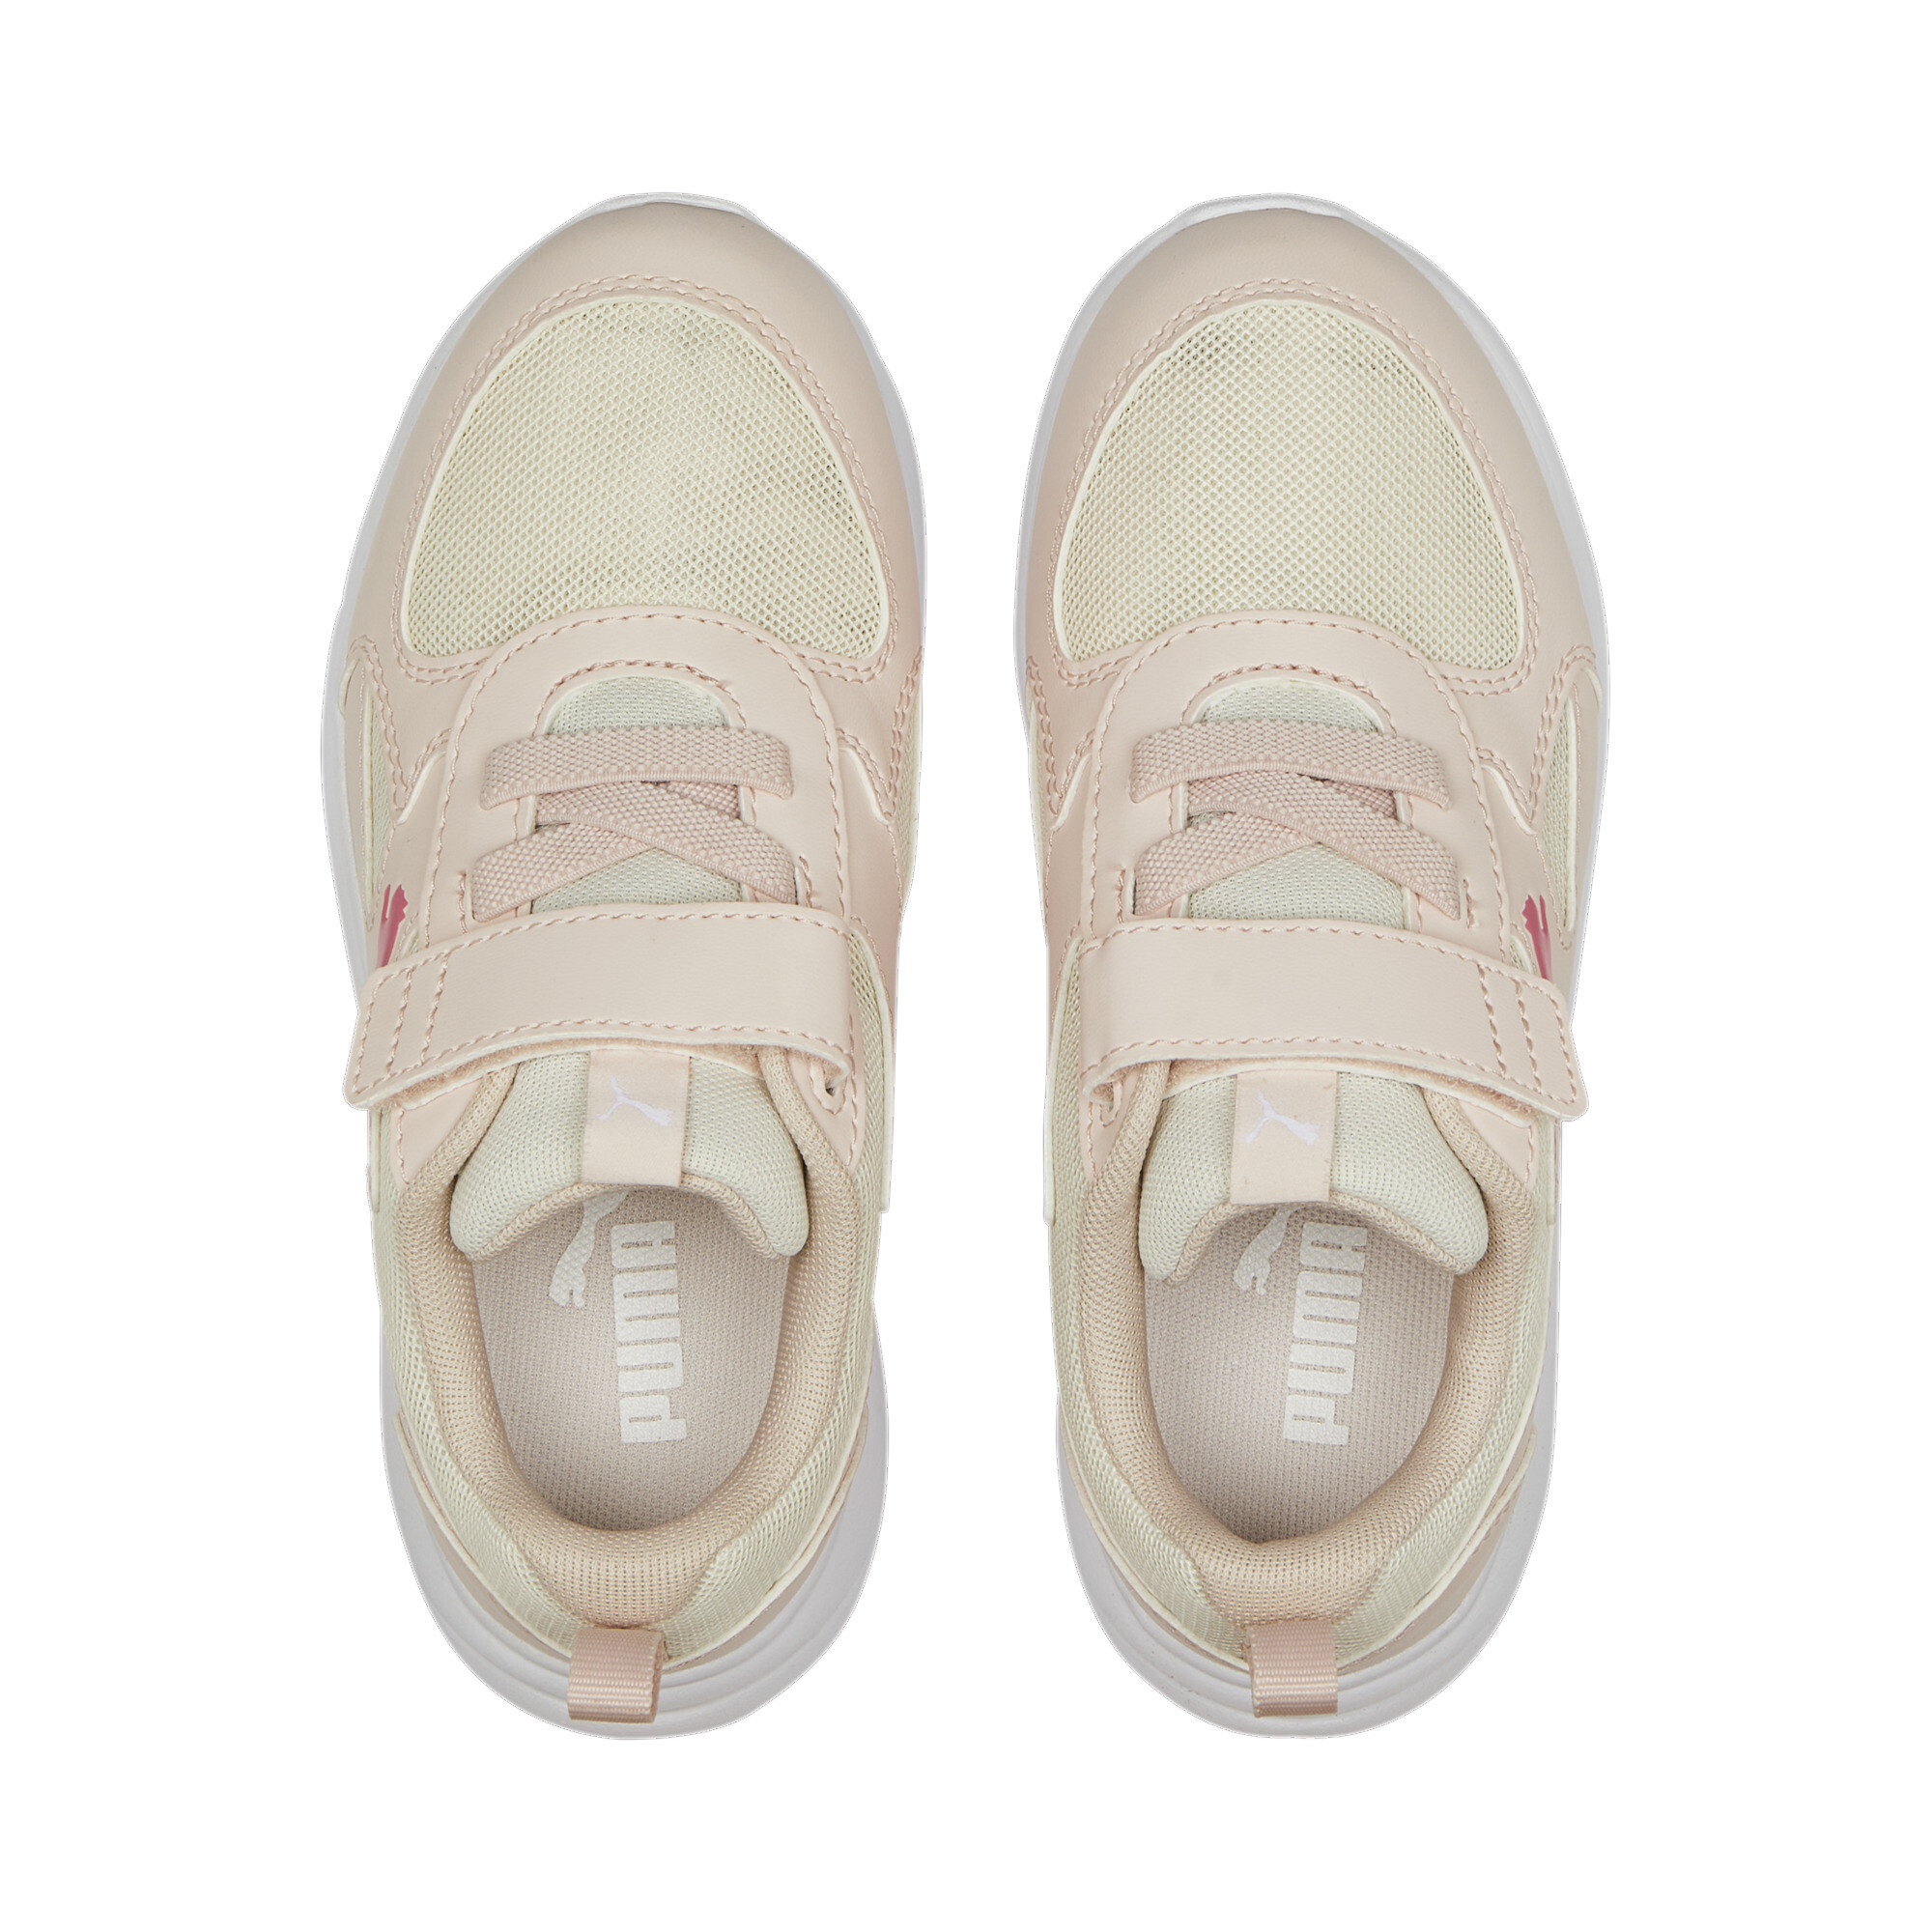 Kids' PUMA Fun Racer Sneakers In White/Pink, Size EU 29